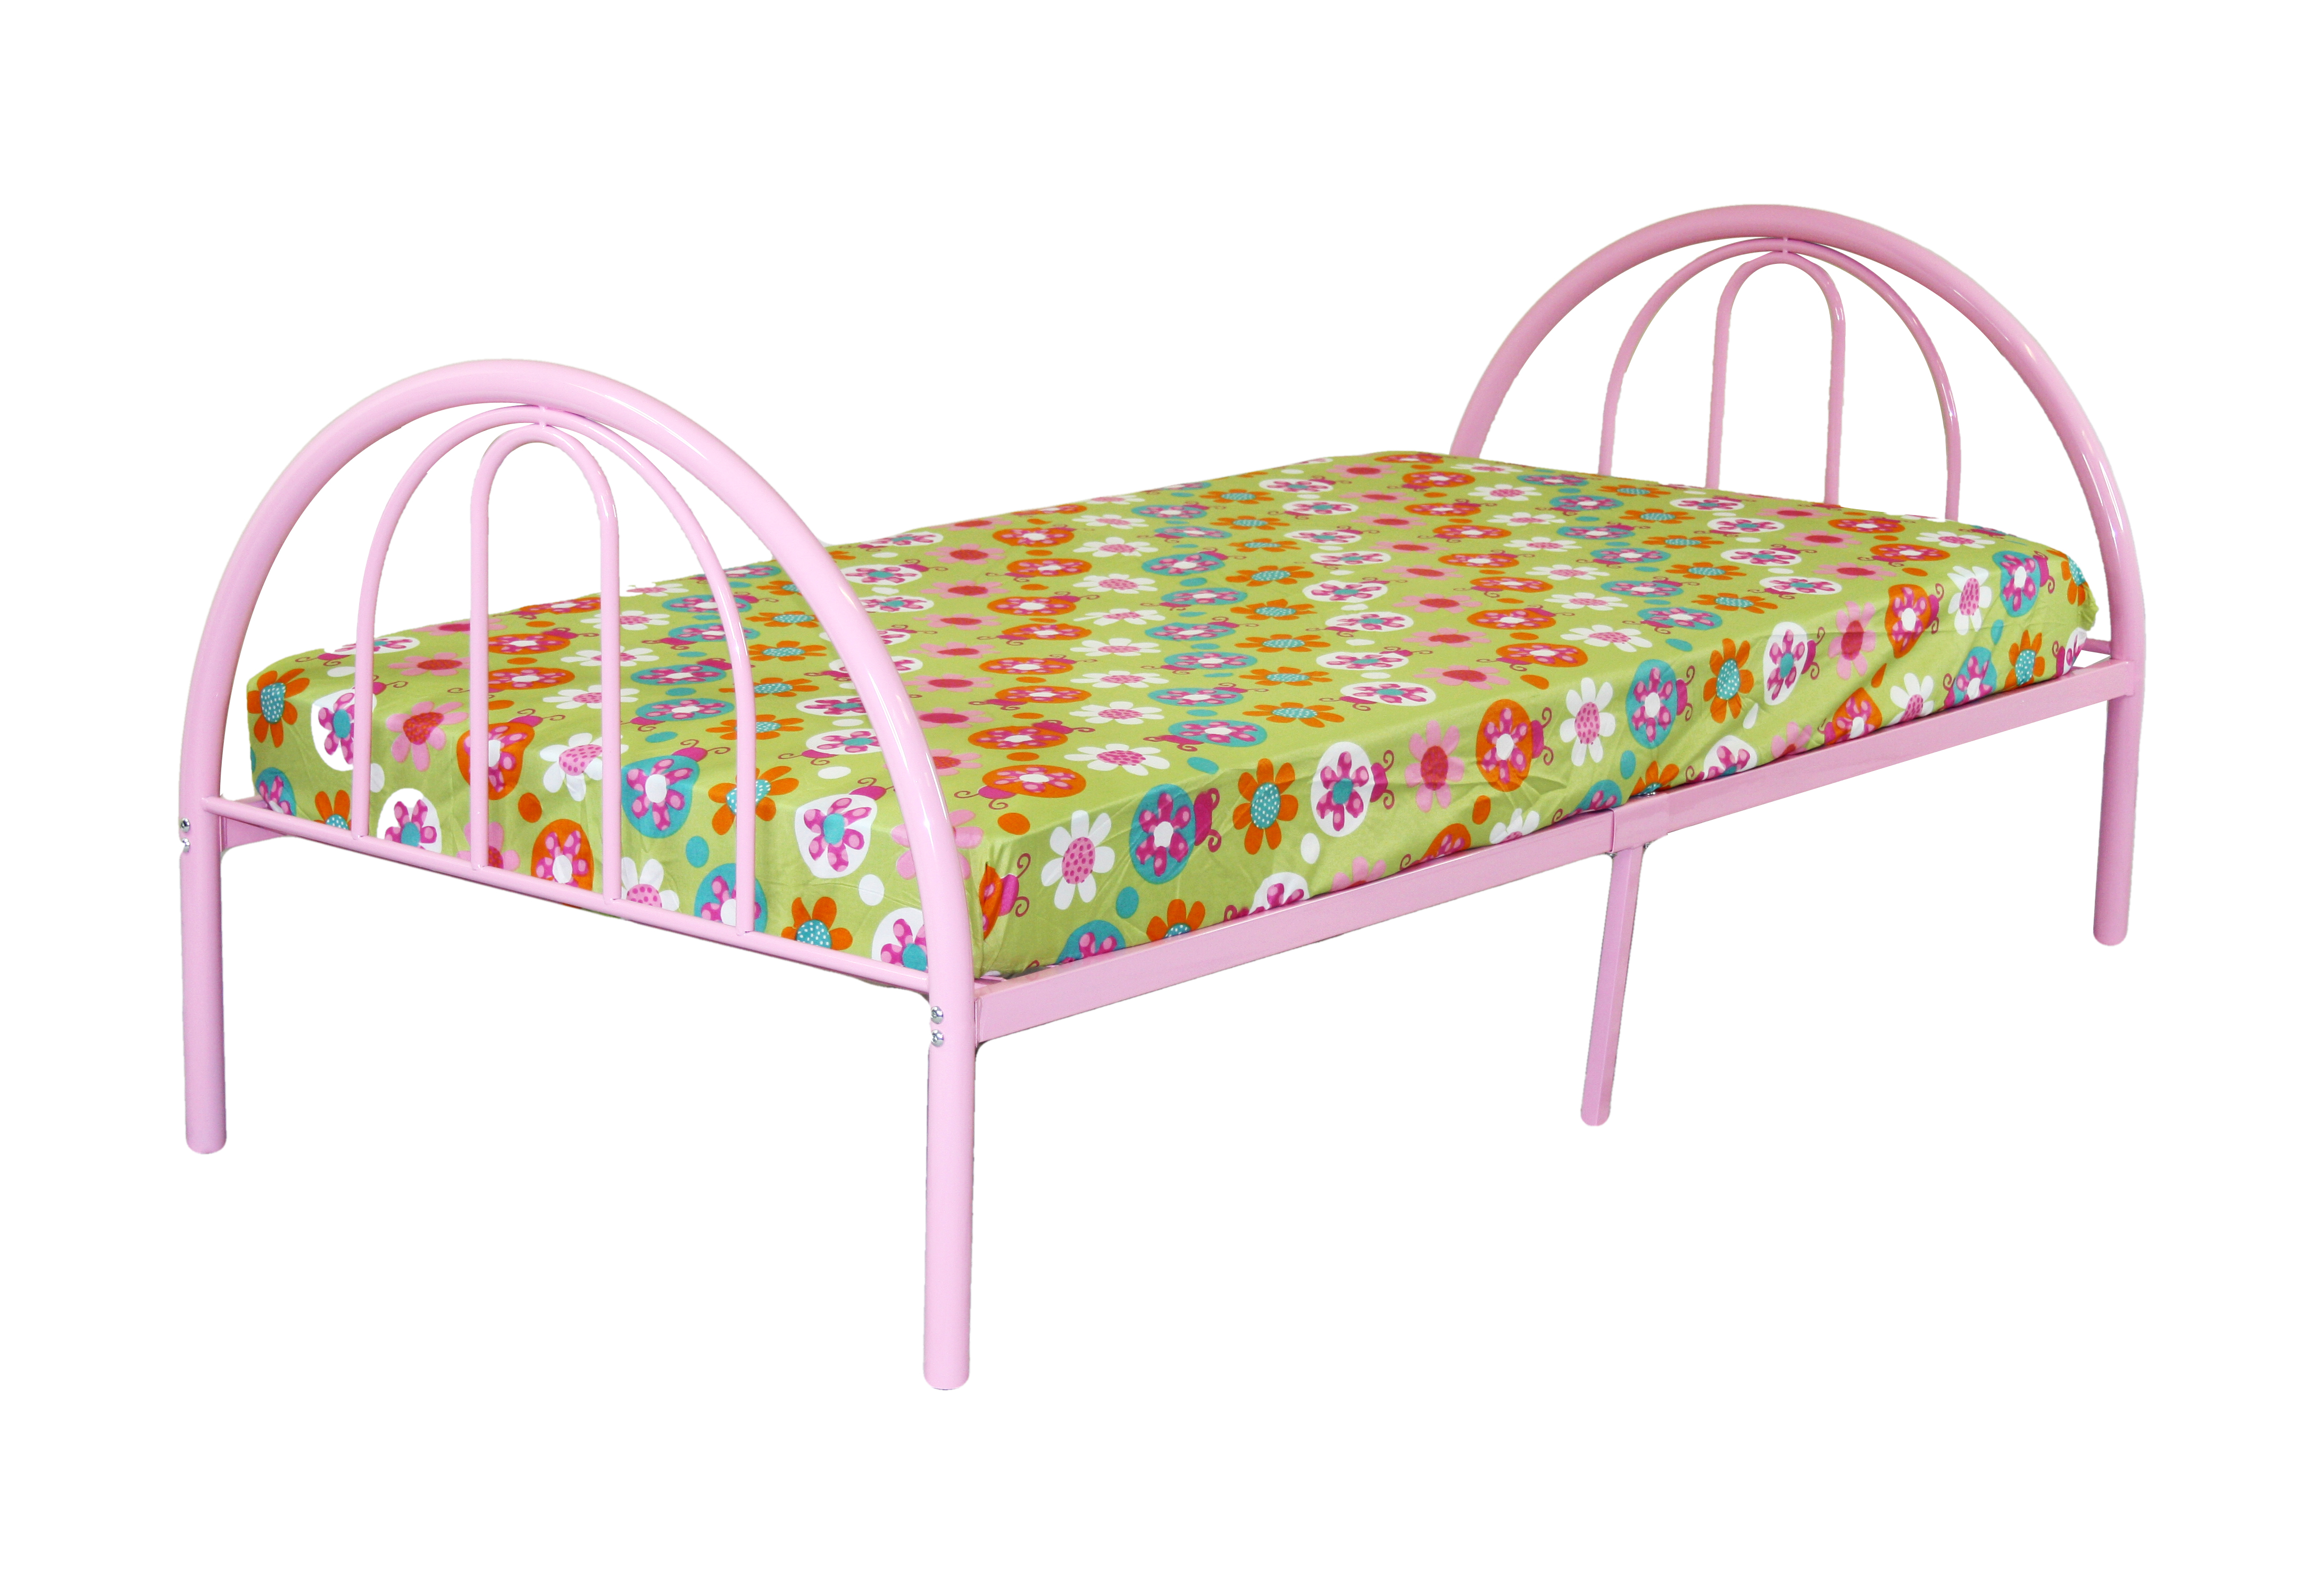 BK Furniture Brooklyn Classic Metal Bed, Twin, Pink - image 5 of 8